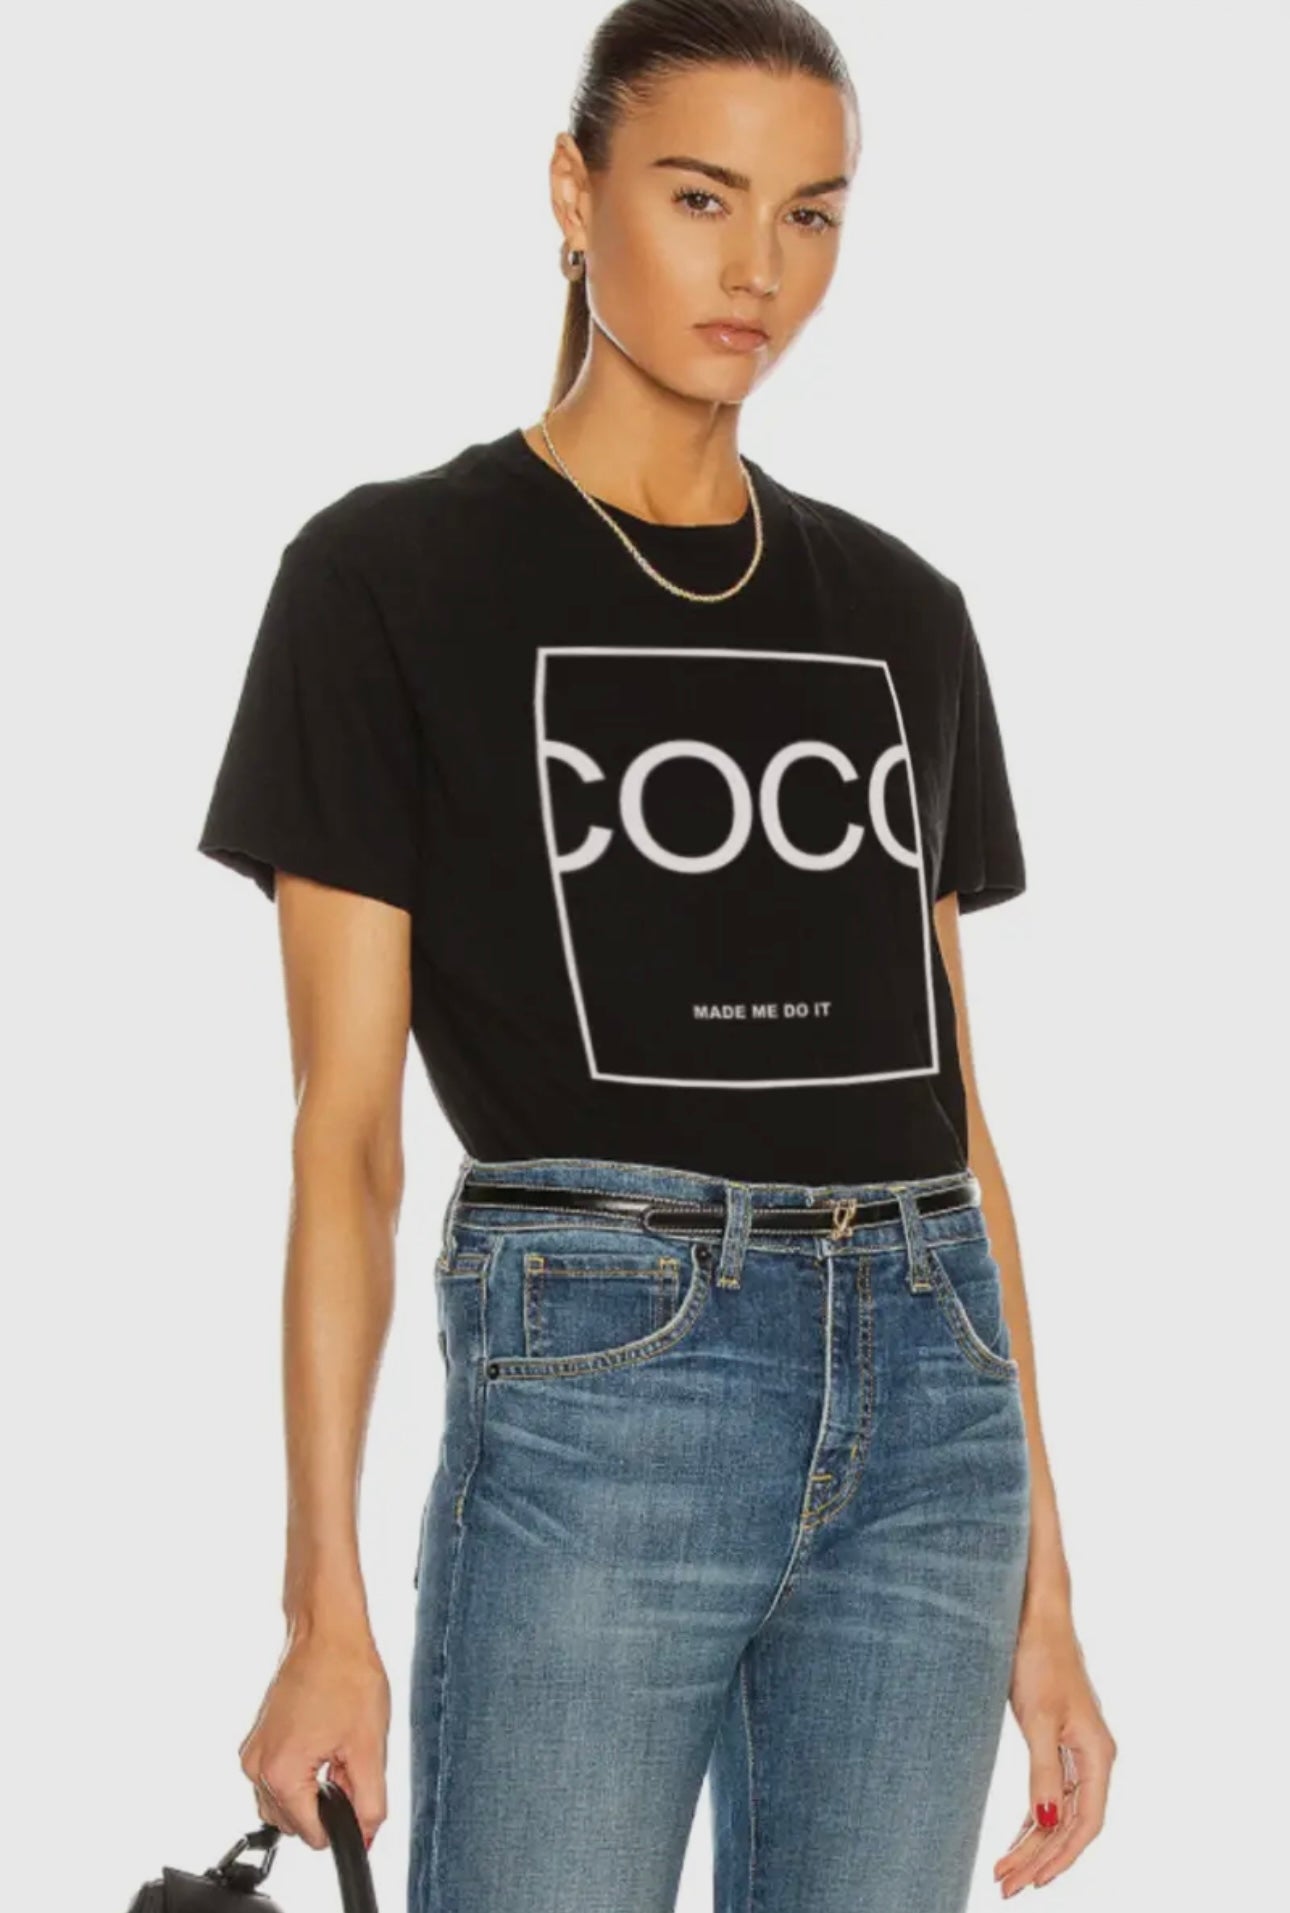 Coco Made Me Do It Tee Shirt